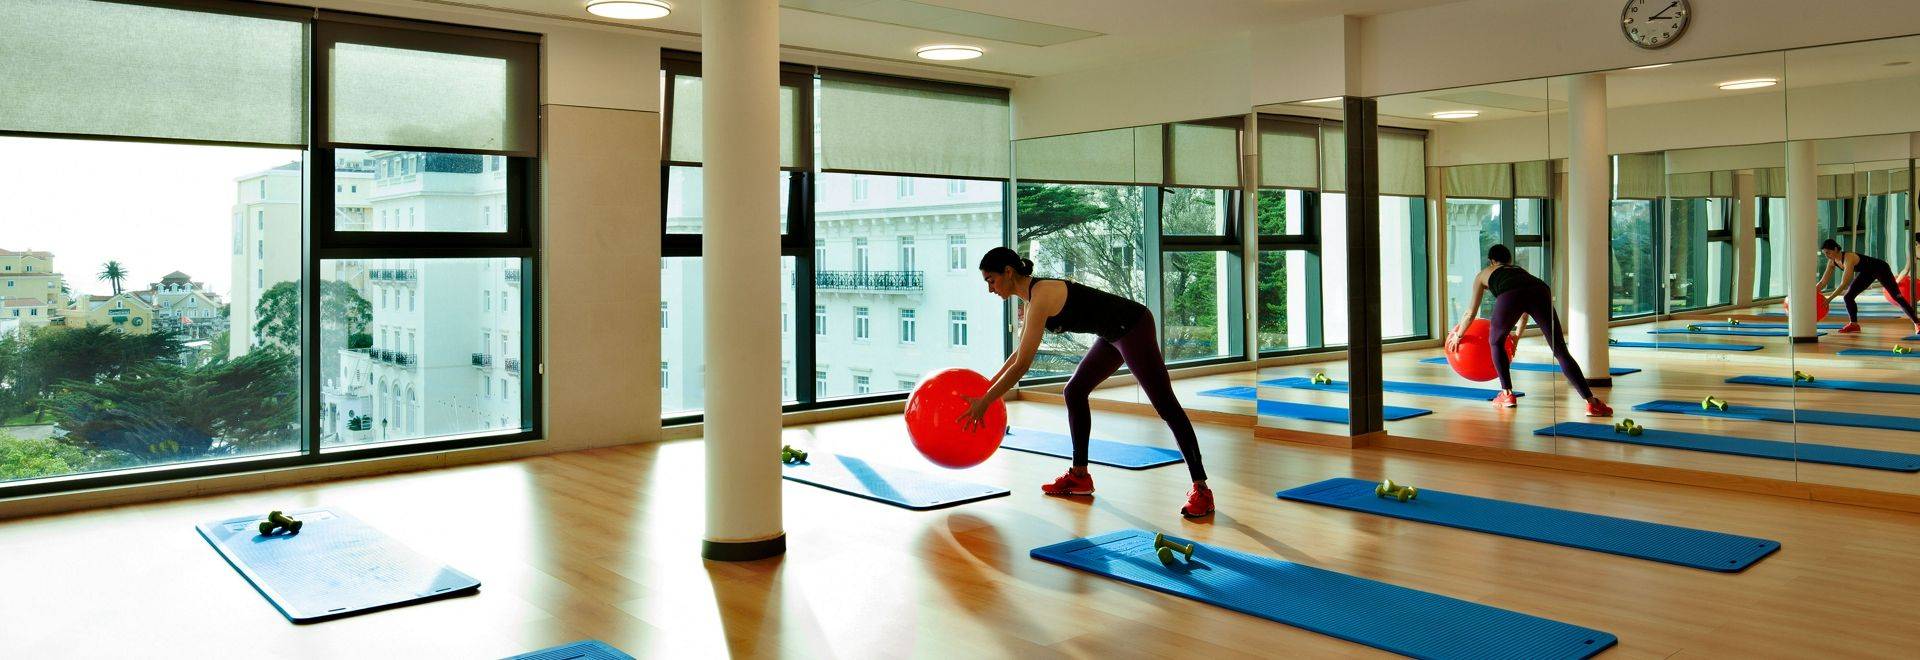 Palacio-Estoril-fitness-center-class.jpg